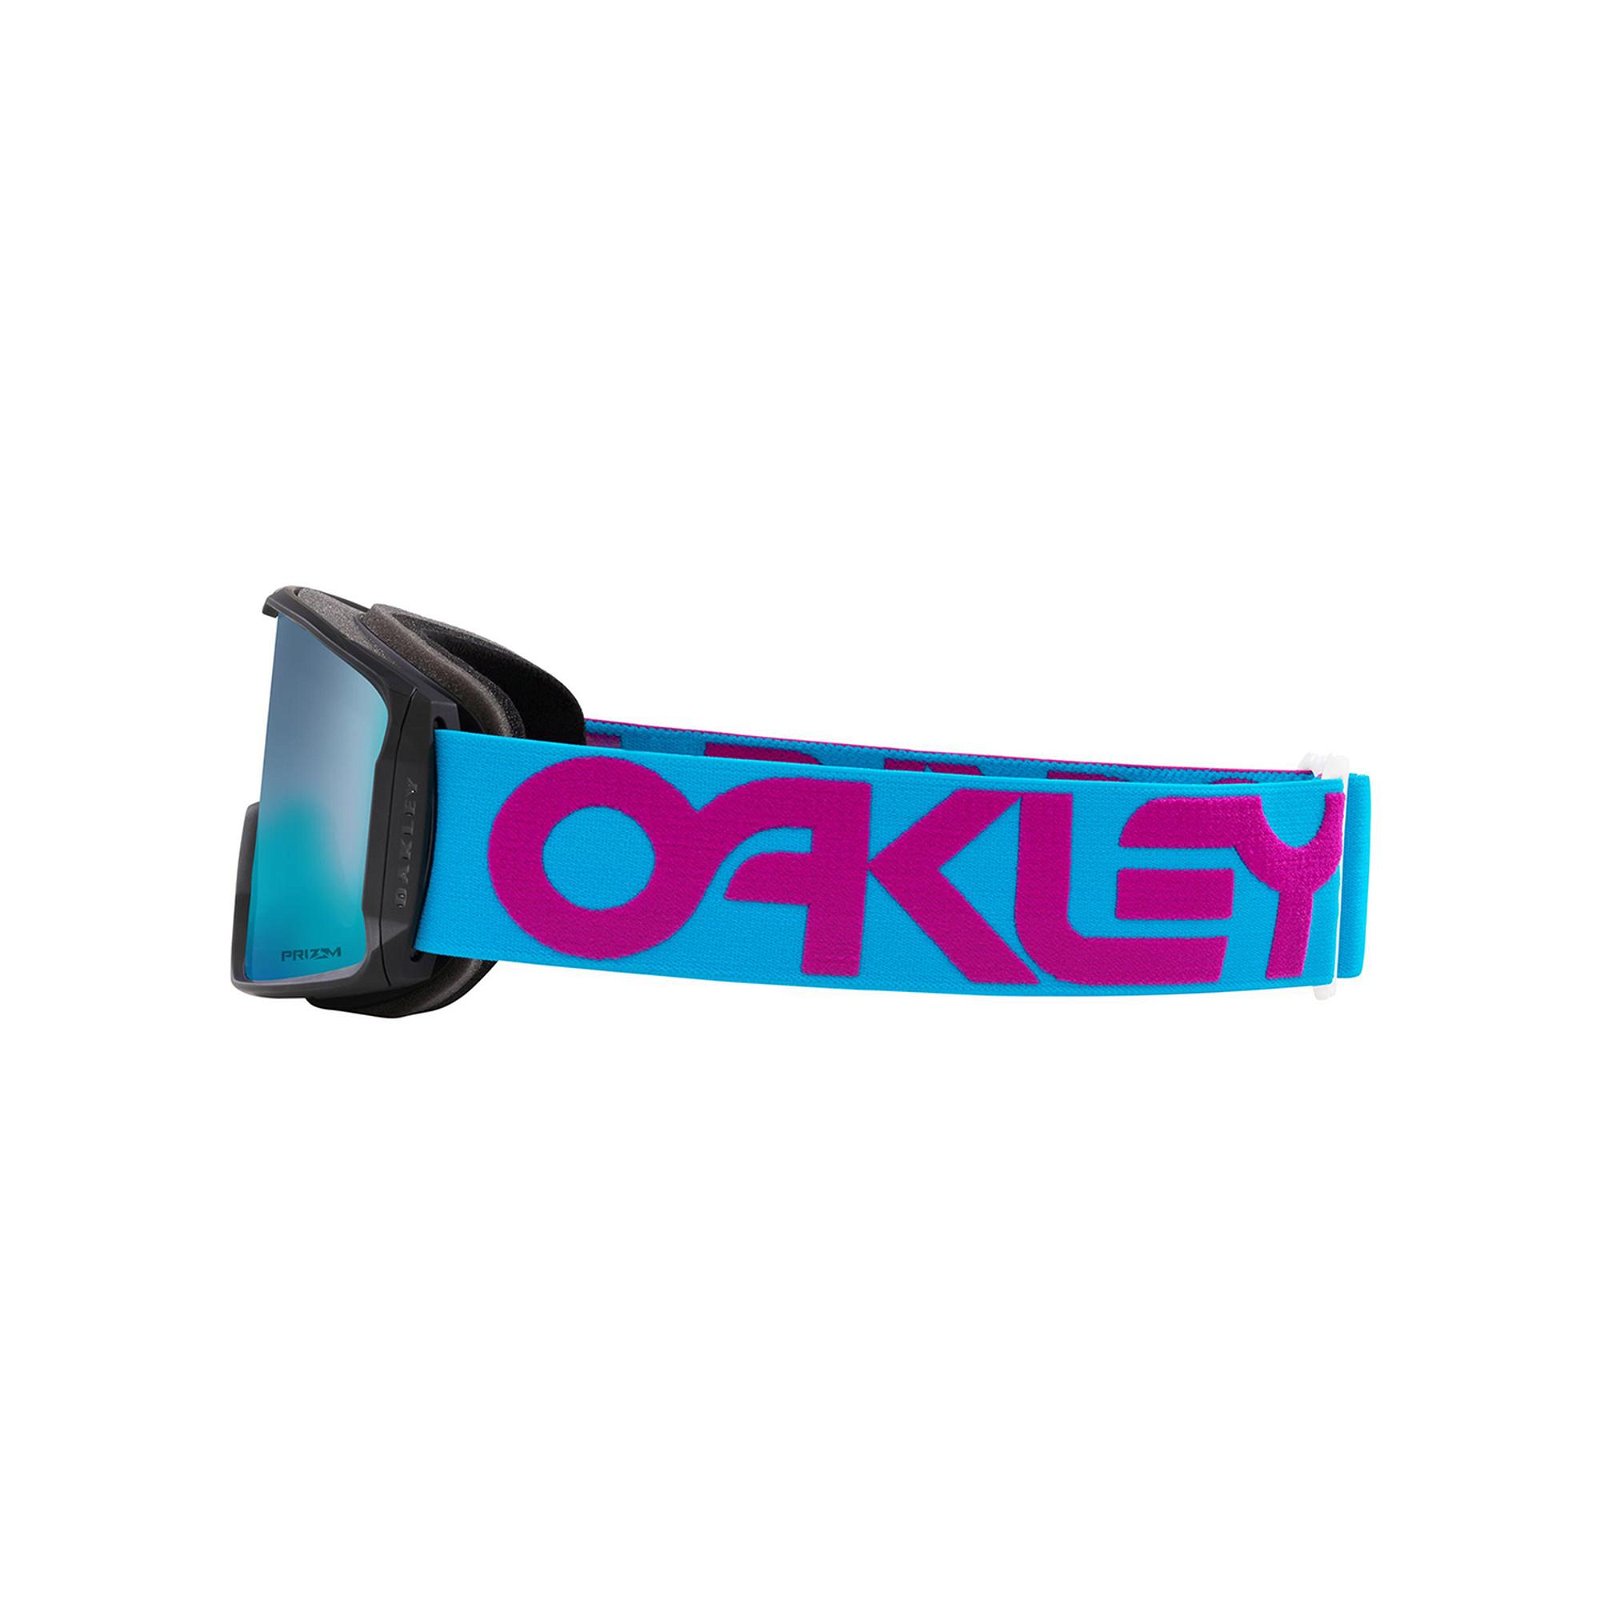 Oakley Line Miner L Kayak/Snowboard Goggle